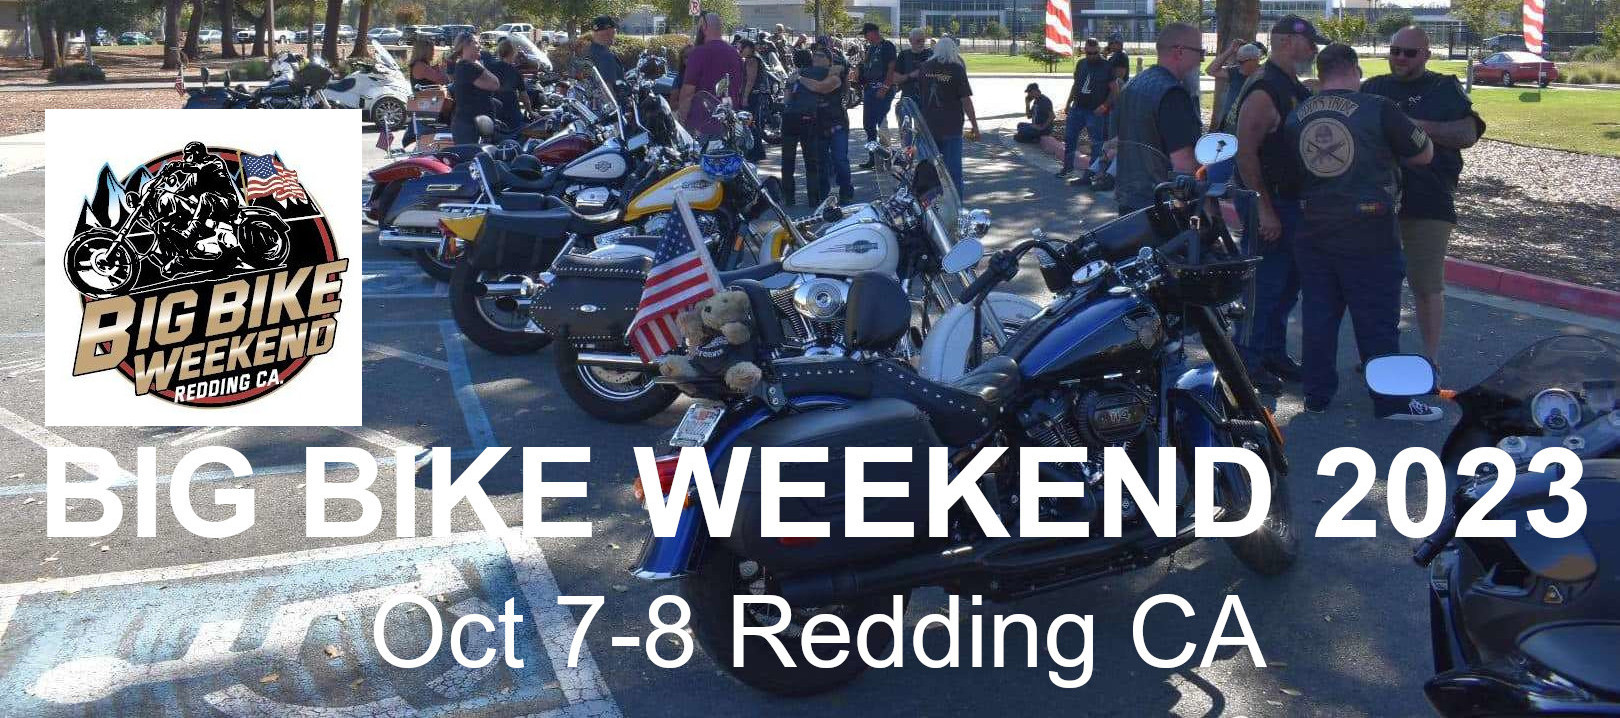 Big Bike Weekend 2023 Redding California Oct 7-8